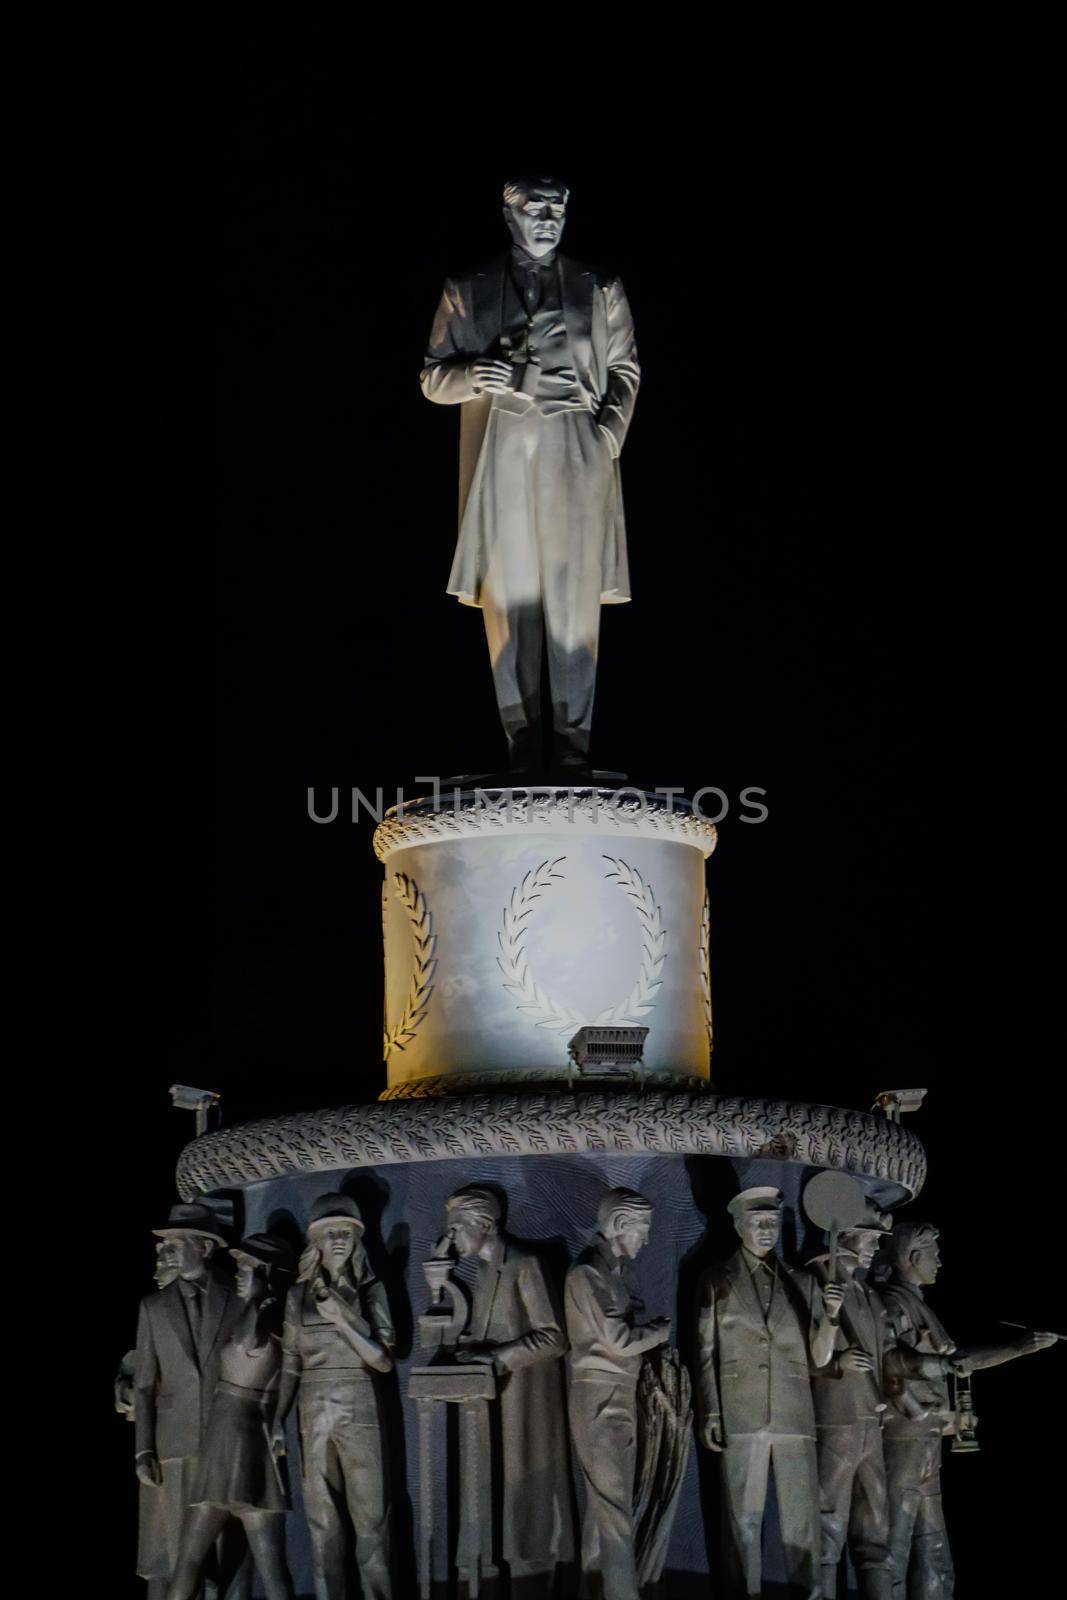 Eskisehir Ataturk Nation Monument made by current mayor Yılmaz Buyukersen